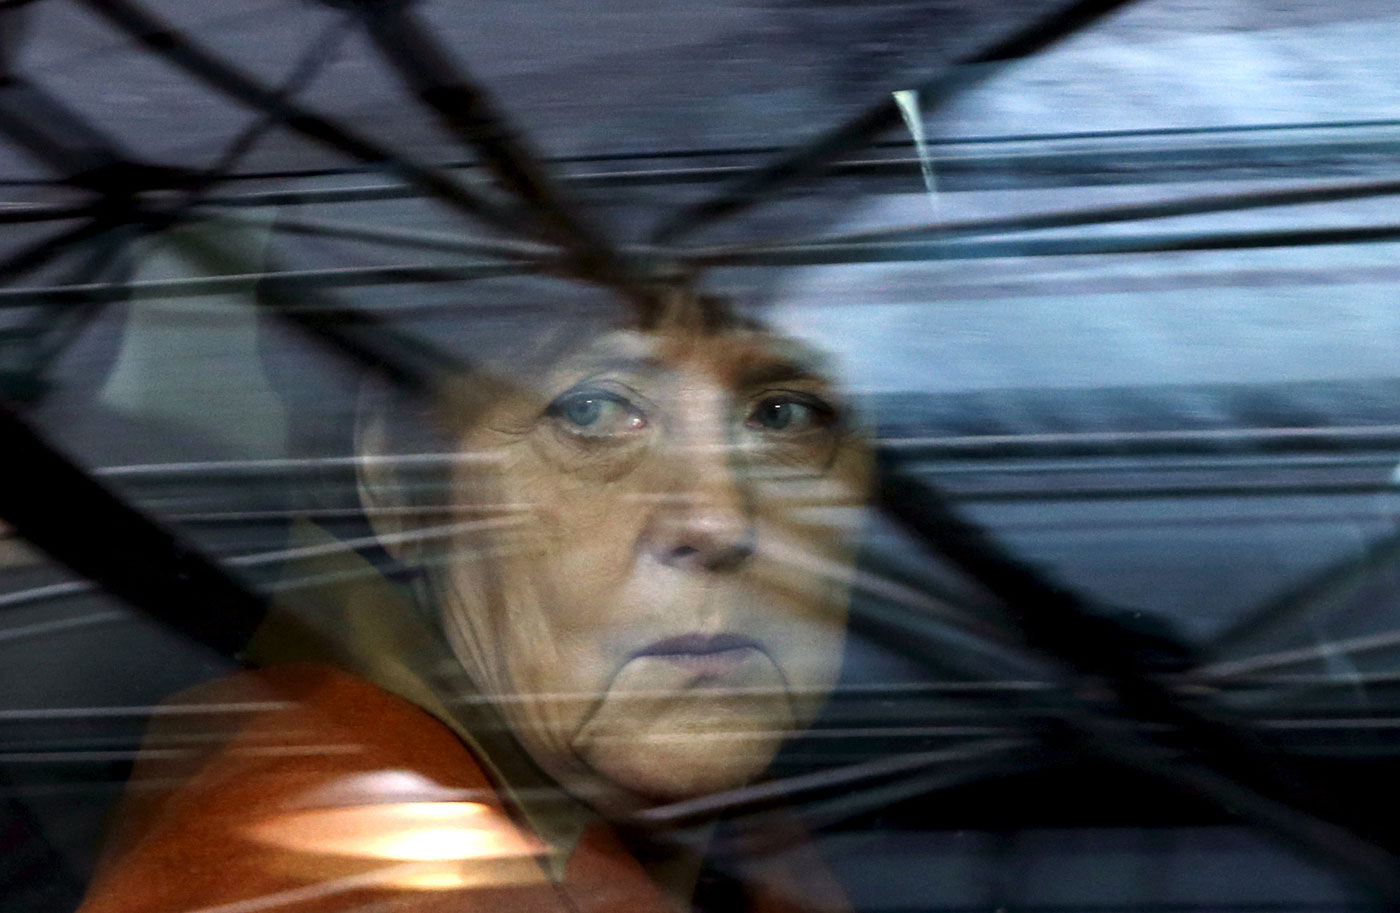 Merkel se postula para un cuarto mandato como canciller de Alemania